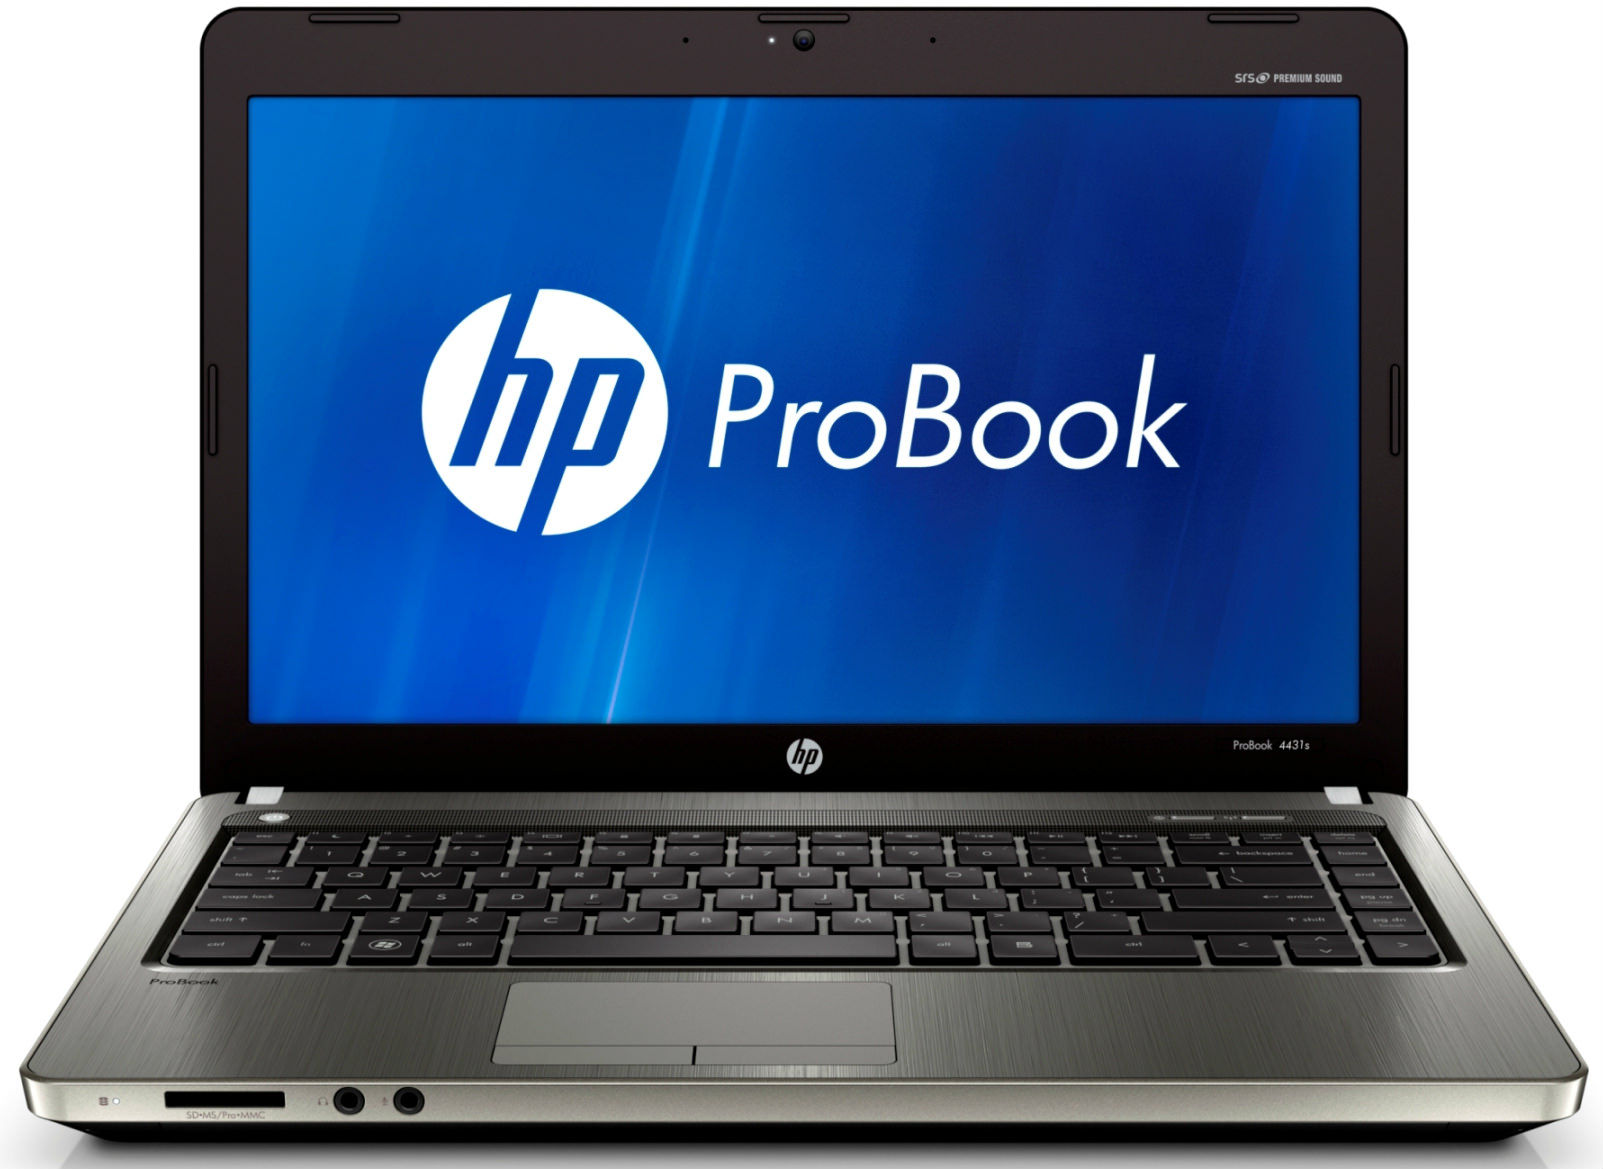 HP ProBook 4431s Laptop (Core i3 2nd Gen/4 GB/500 GB/DOS/1) Price